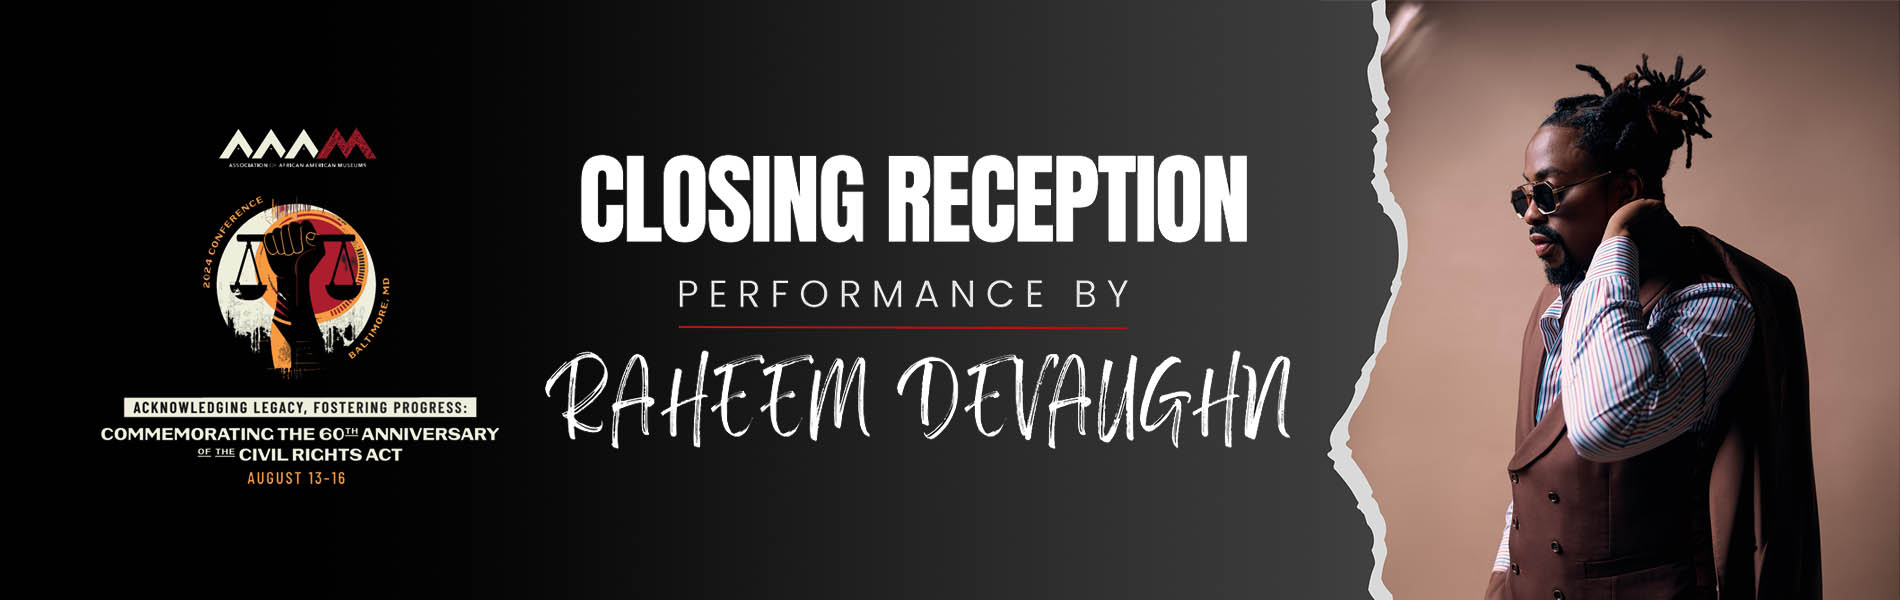 Closing Reception performance by Raheem Devaughn